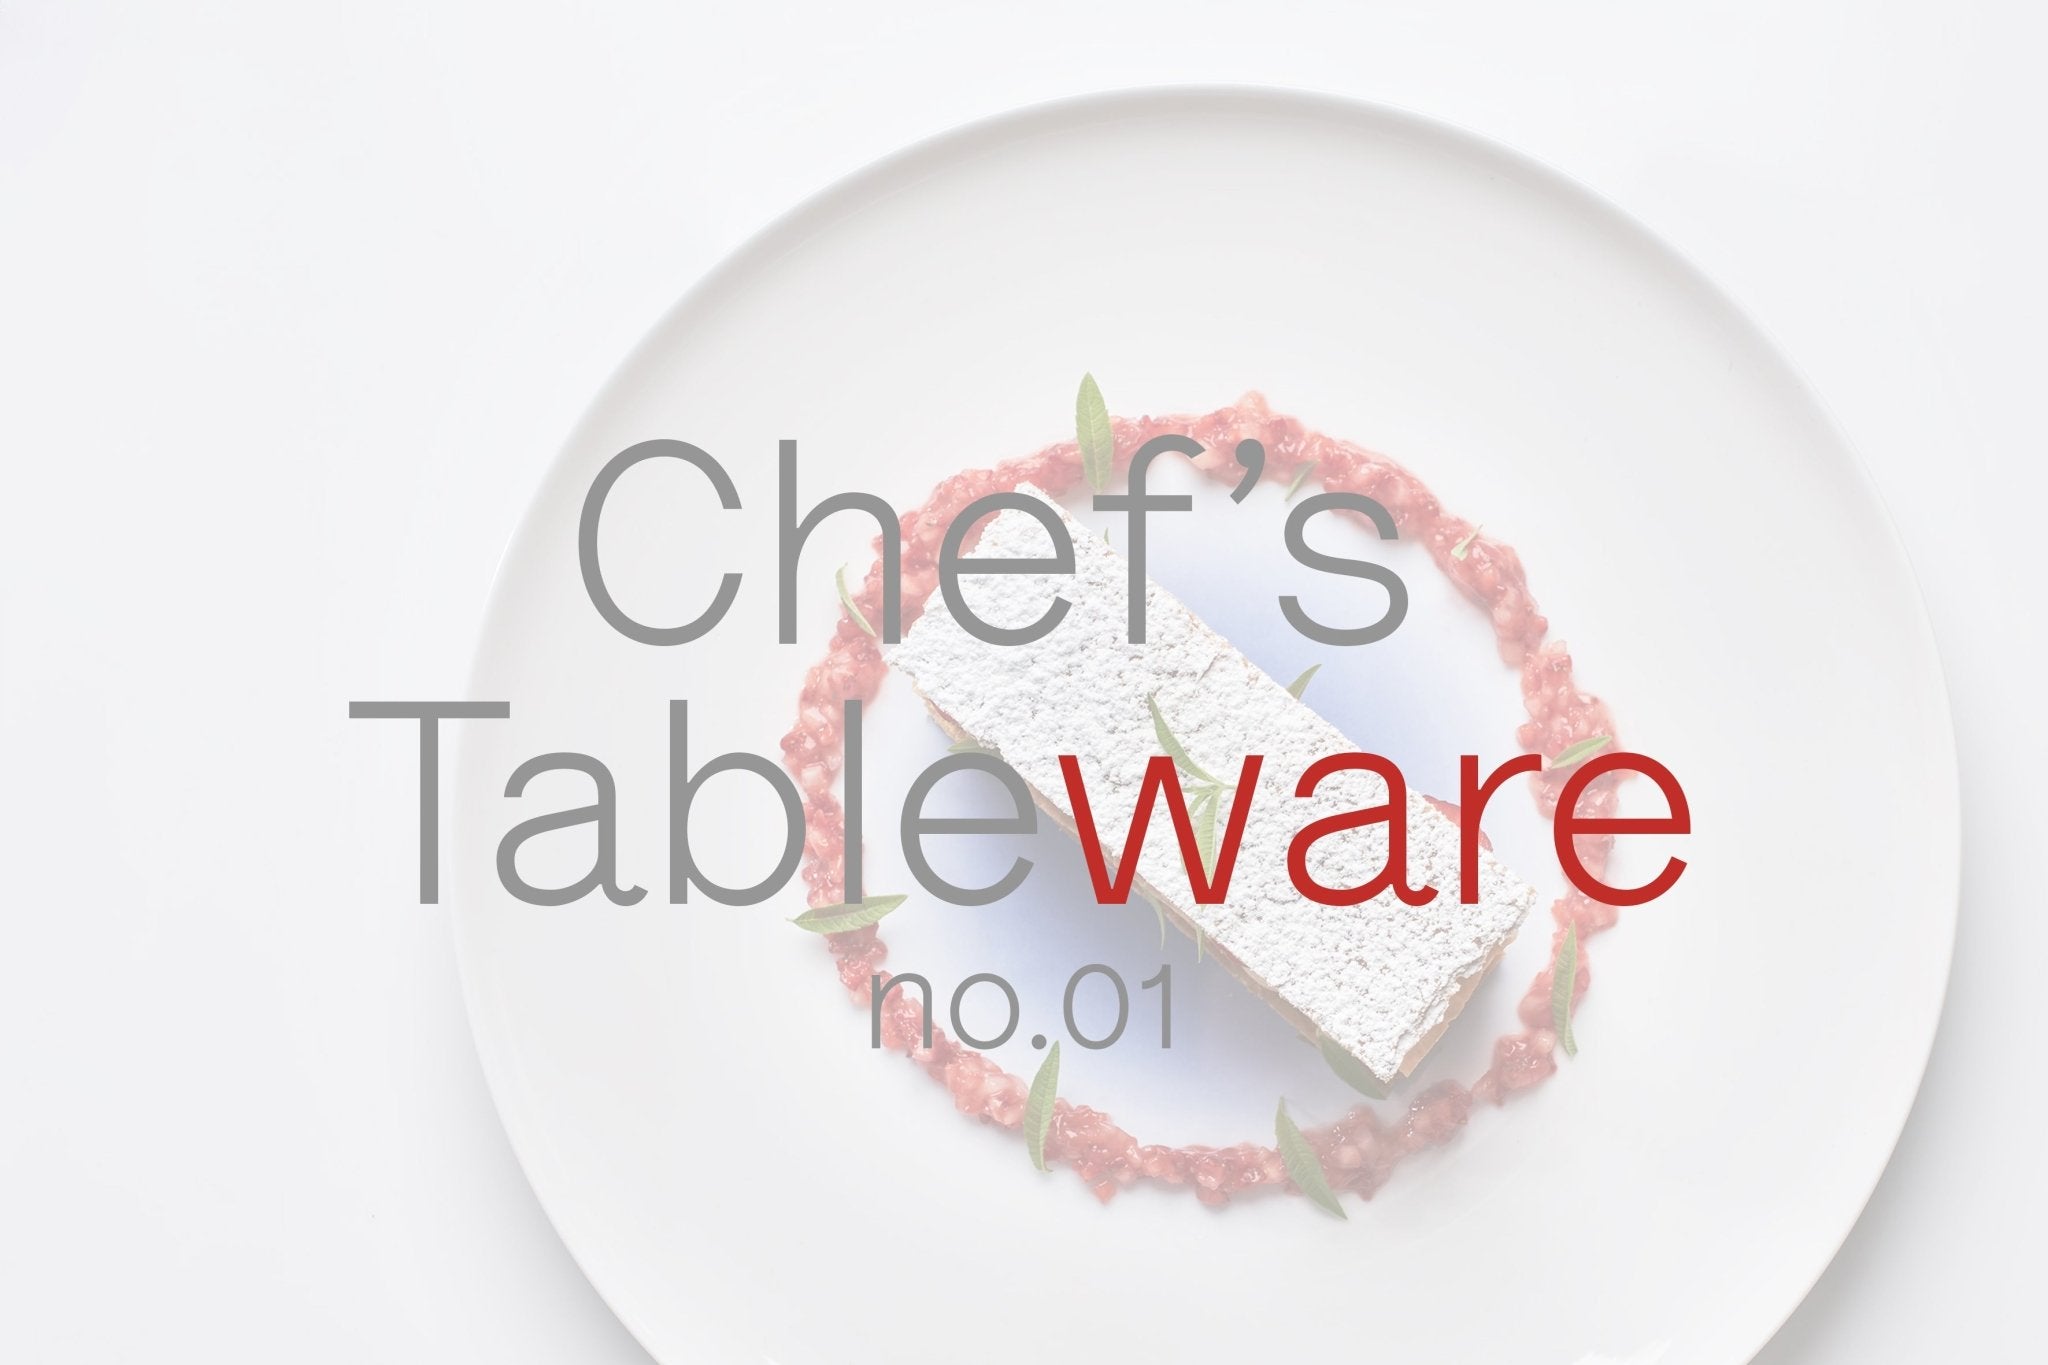 Chef's Tableware no. 01 | Asimakis' Recipes